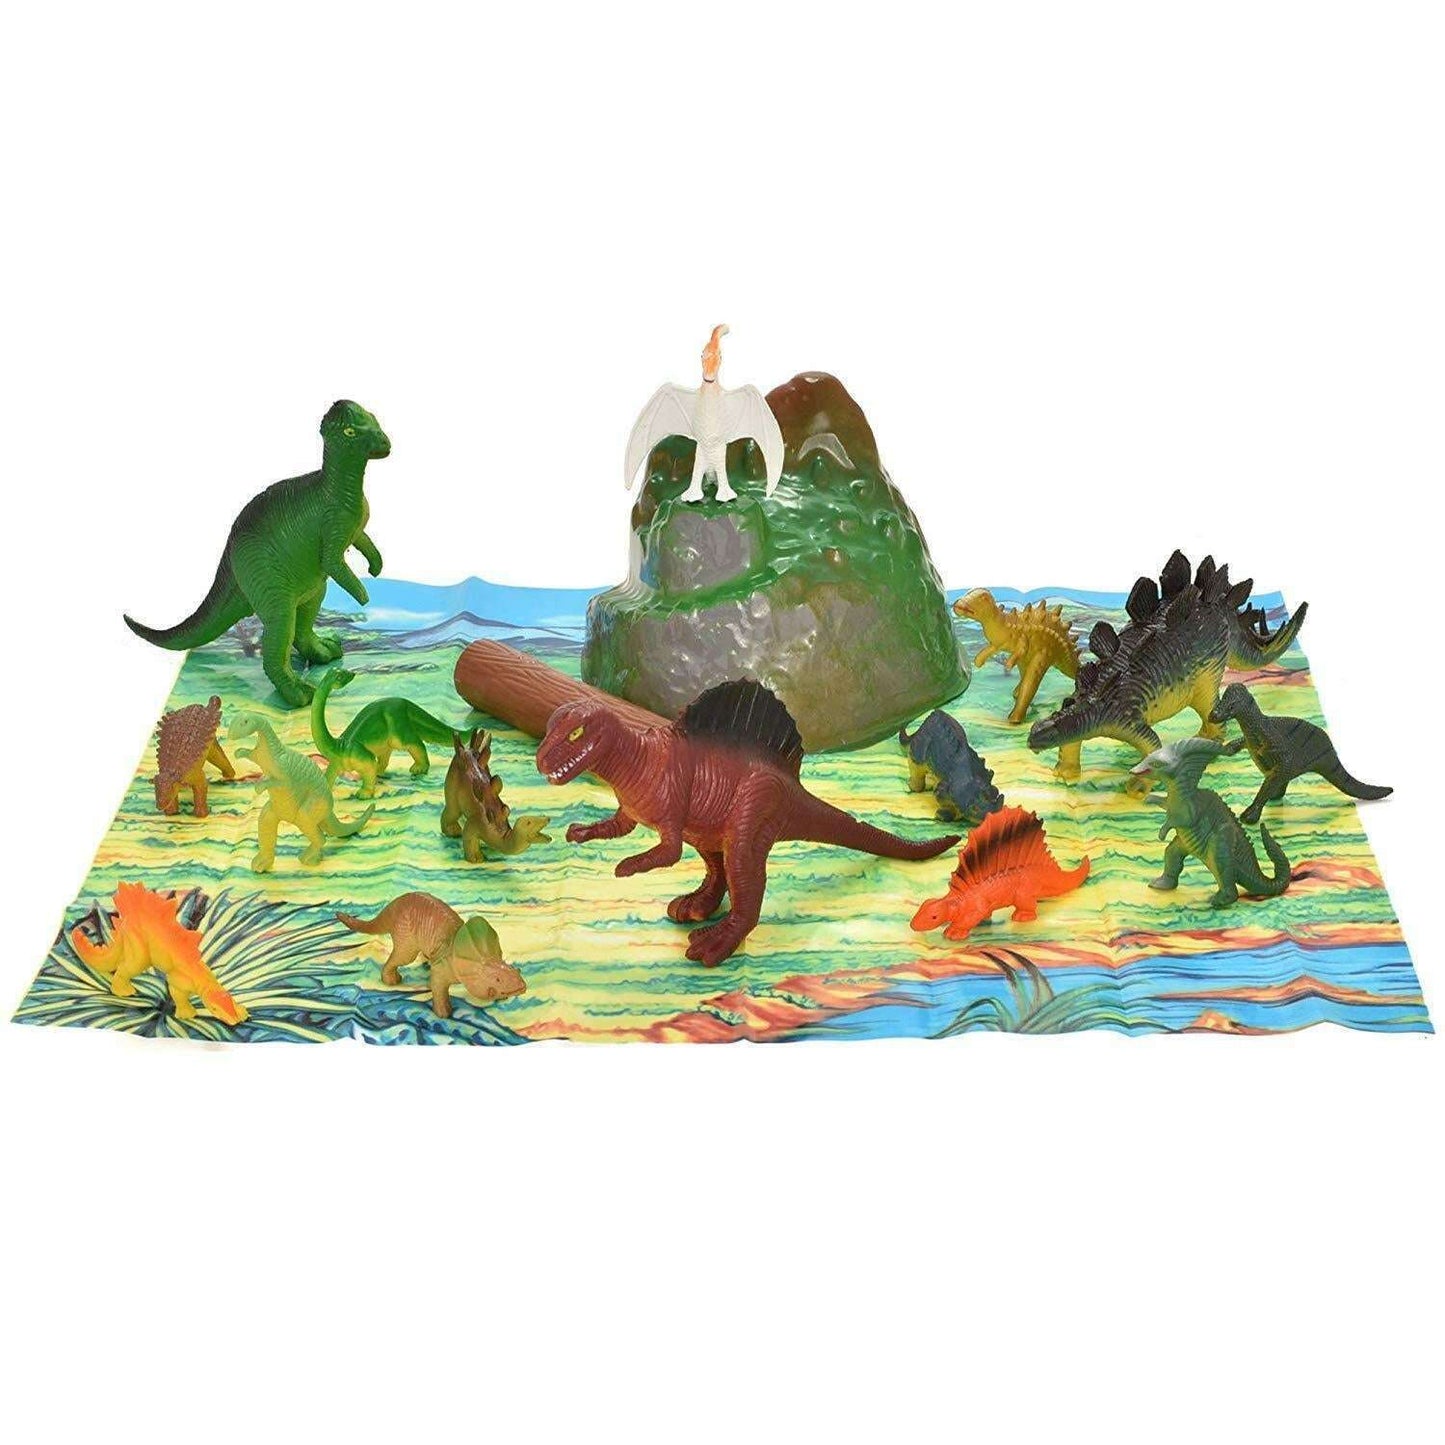 Toys N Tuck:Jurassic Era 18 Piece Dinosaurs Play Set in Tub,Kandy Toys